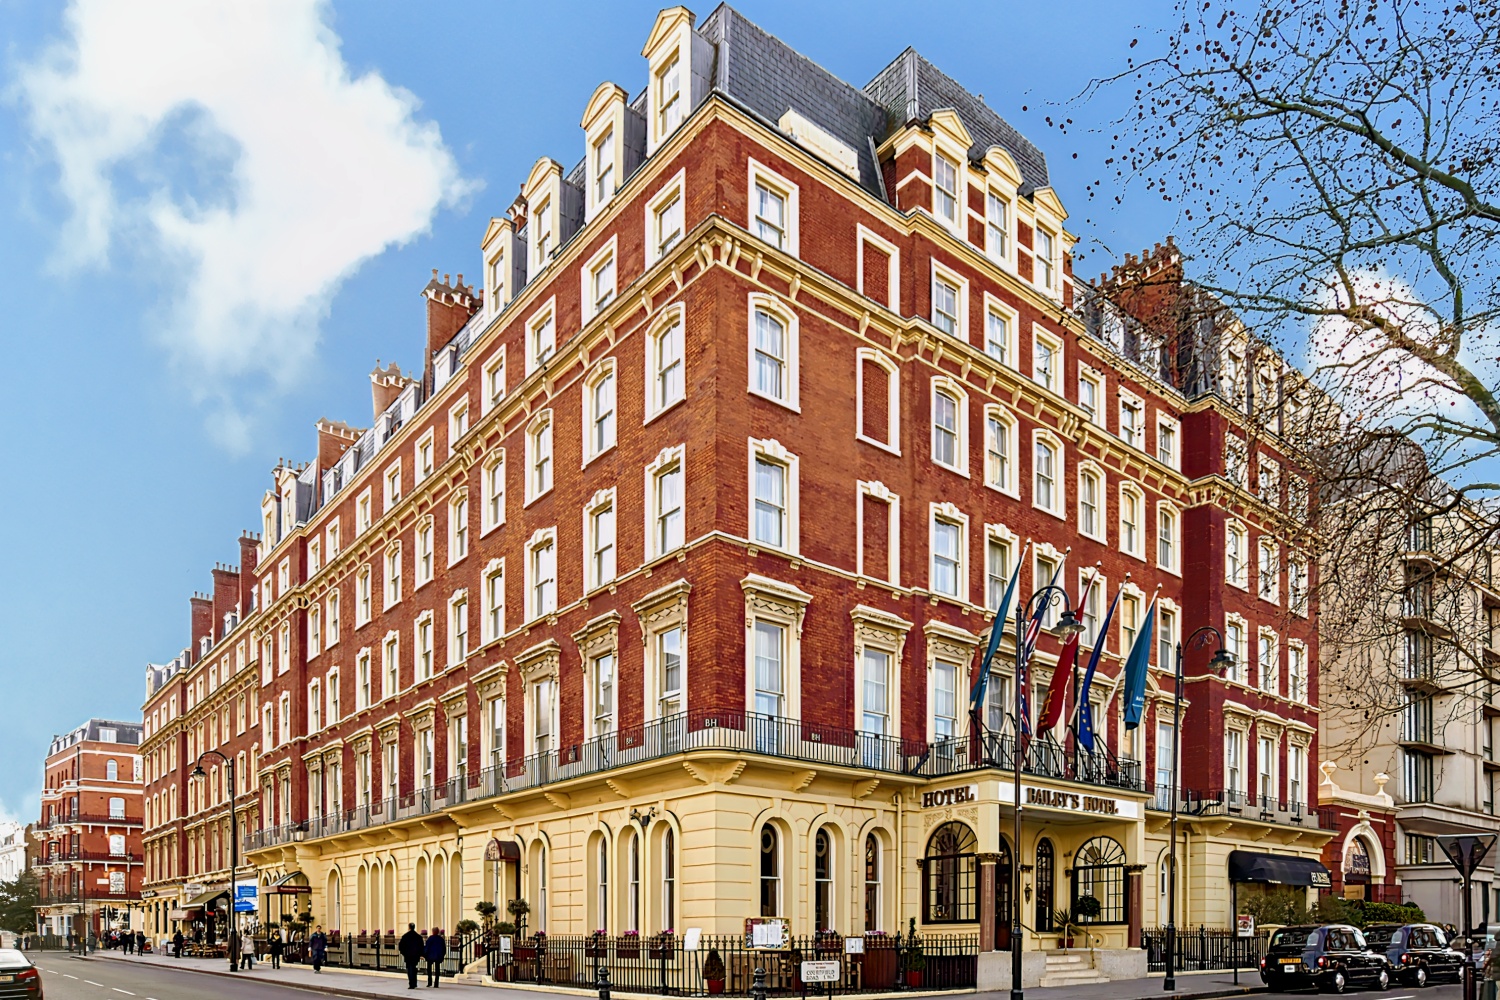 The Bailey’s Hotel, London Kensington